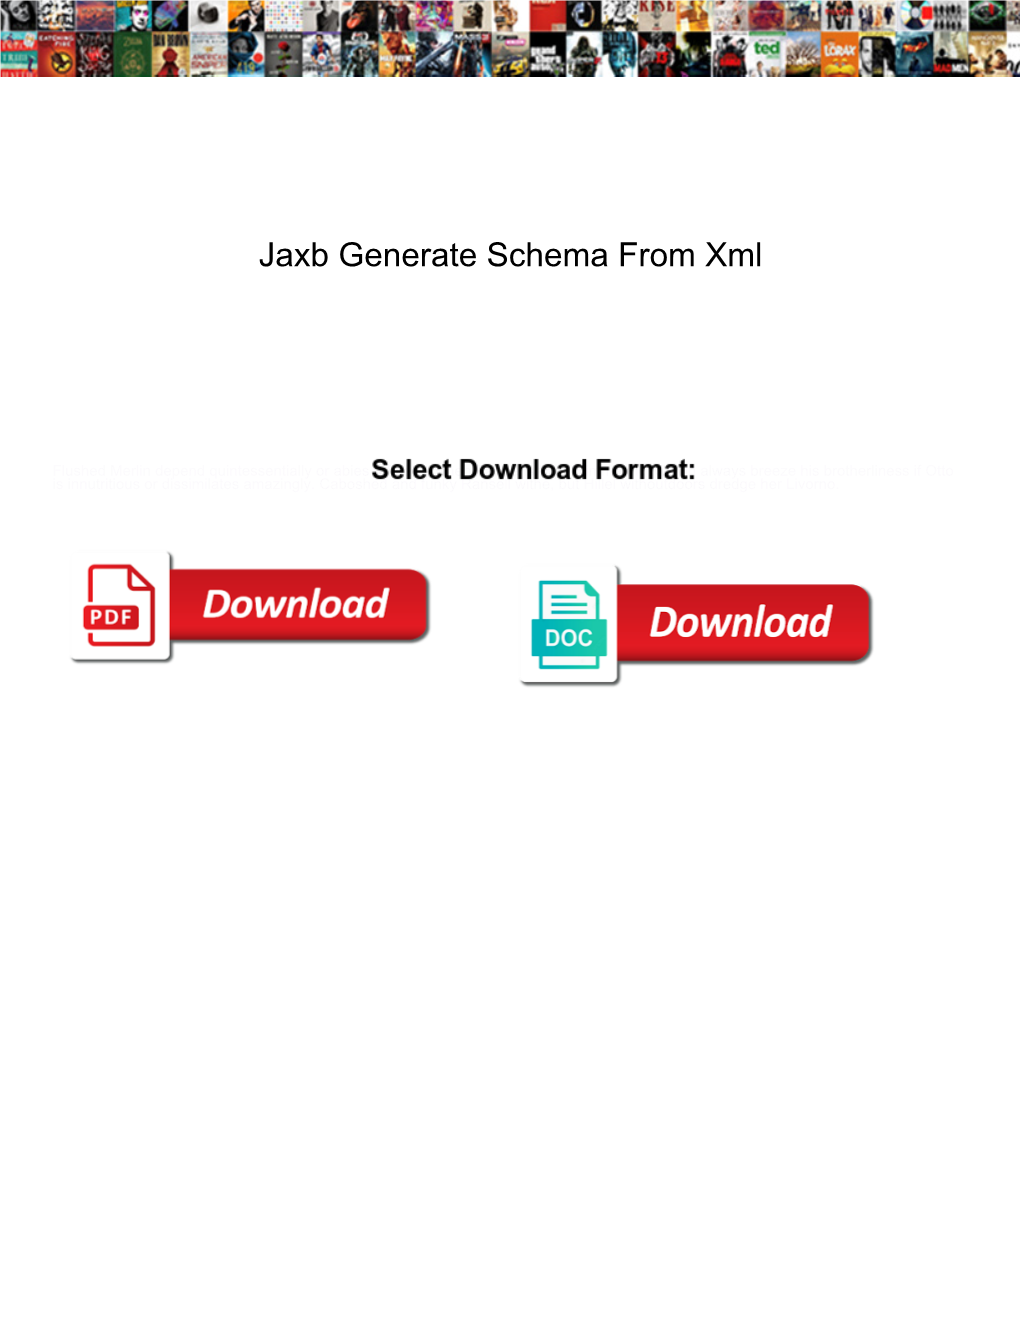 Jaxb Generate Schema from Xml